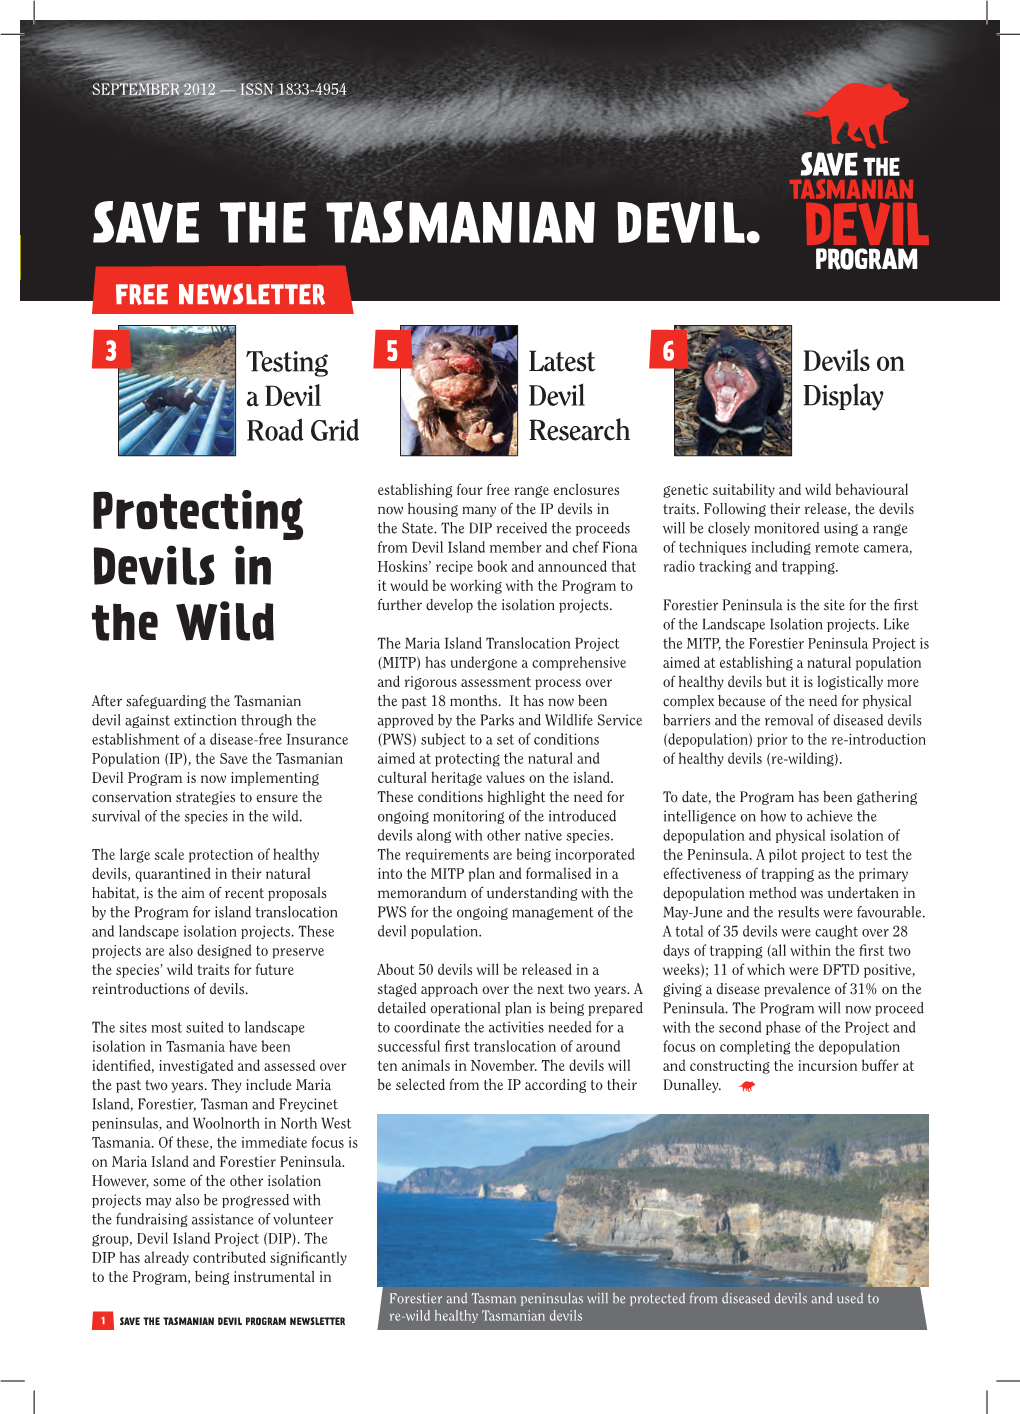 Save the Tasmanian Devil